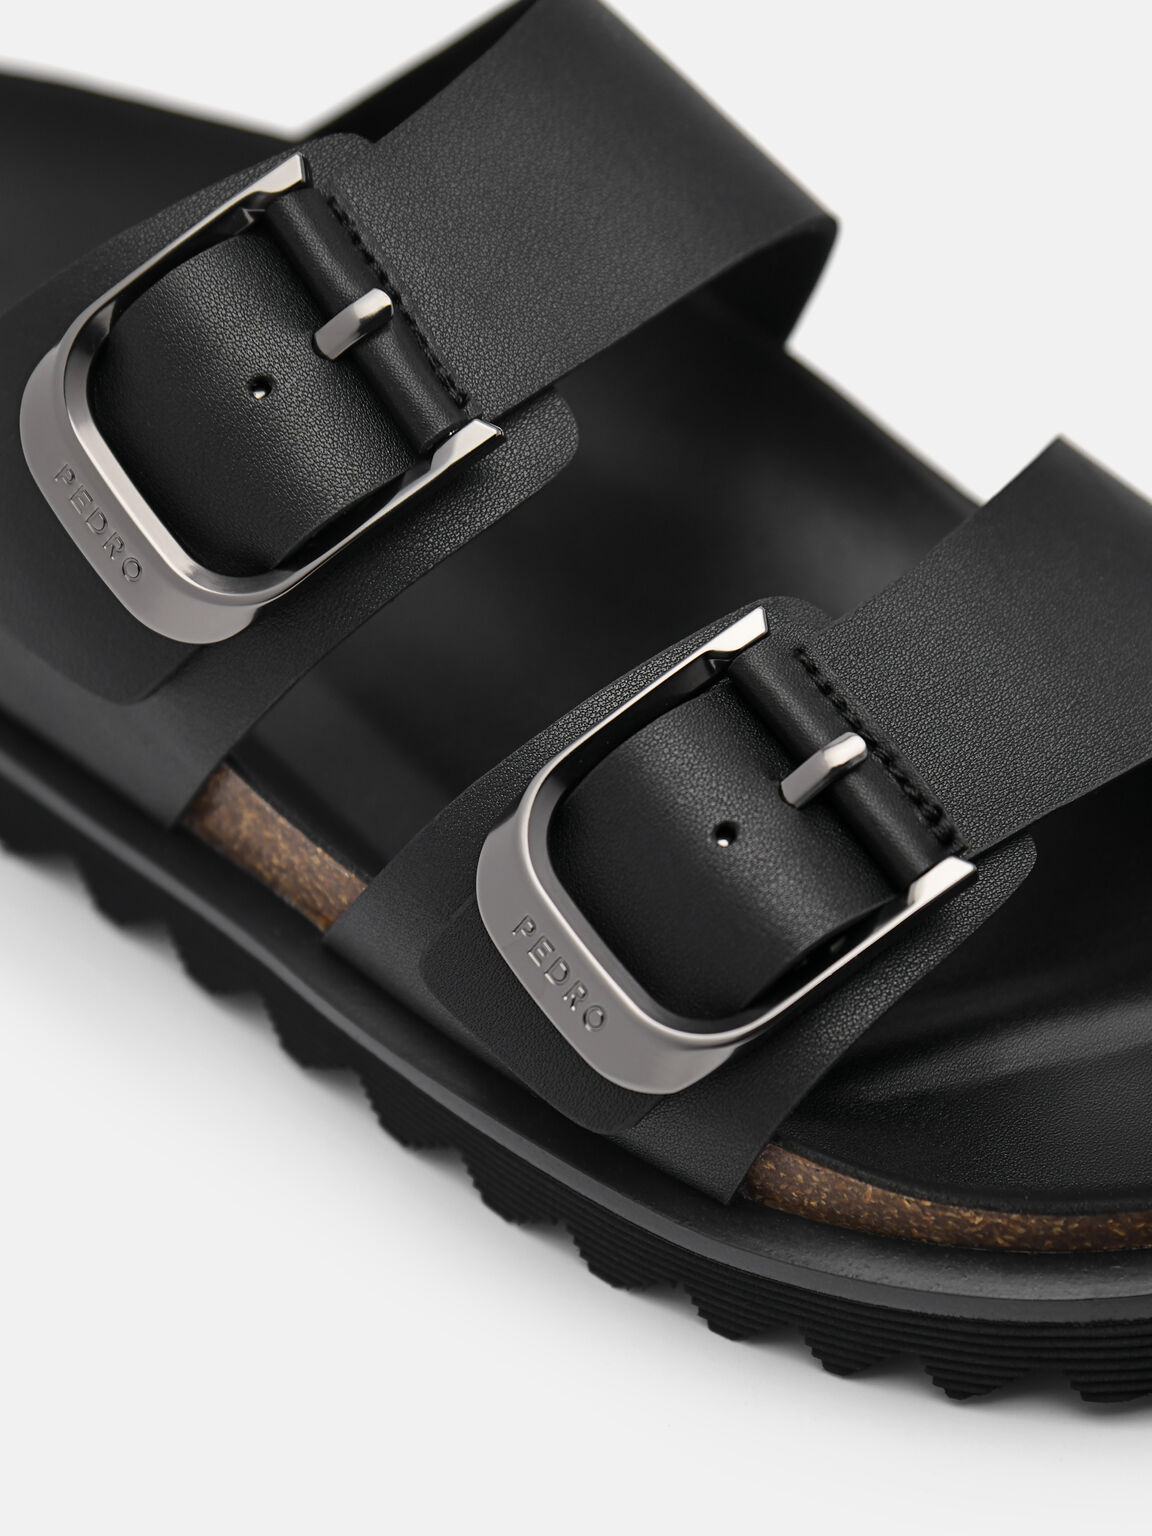 Helix Sandals, Black